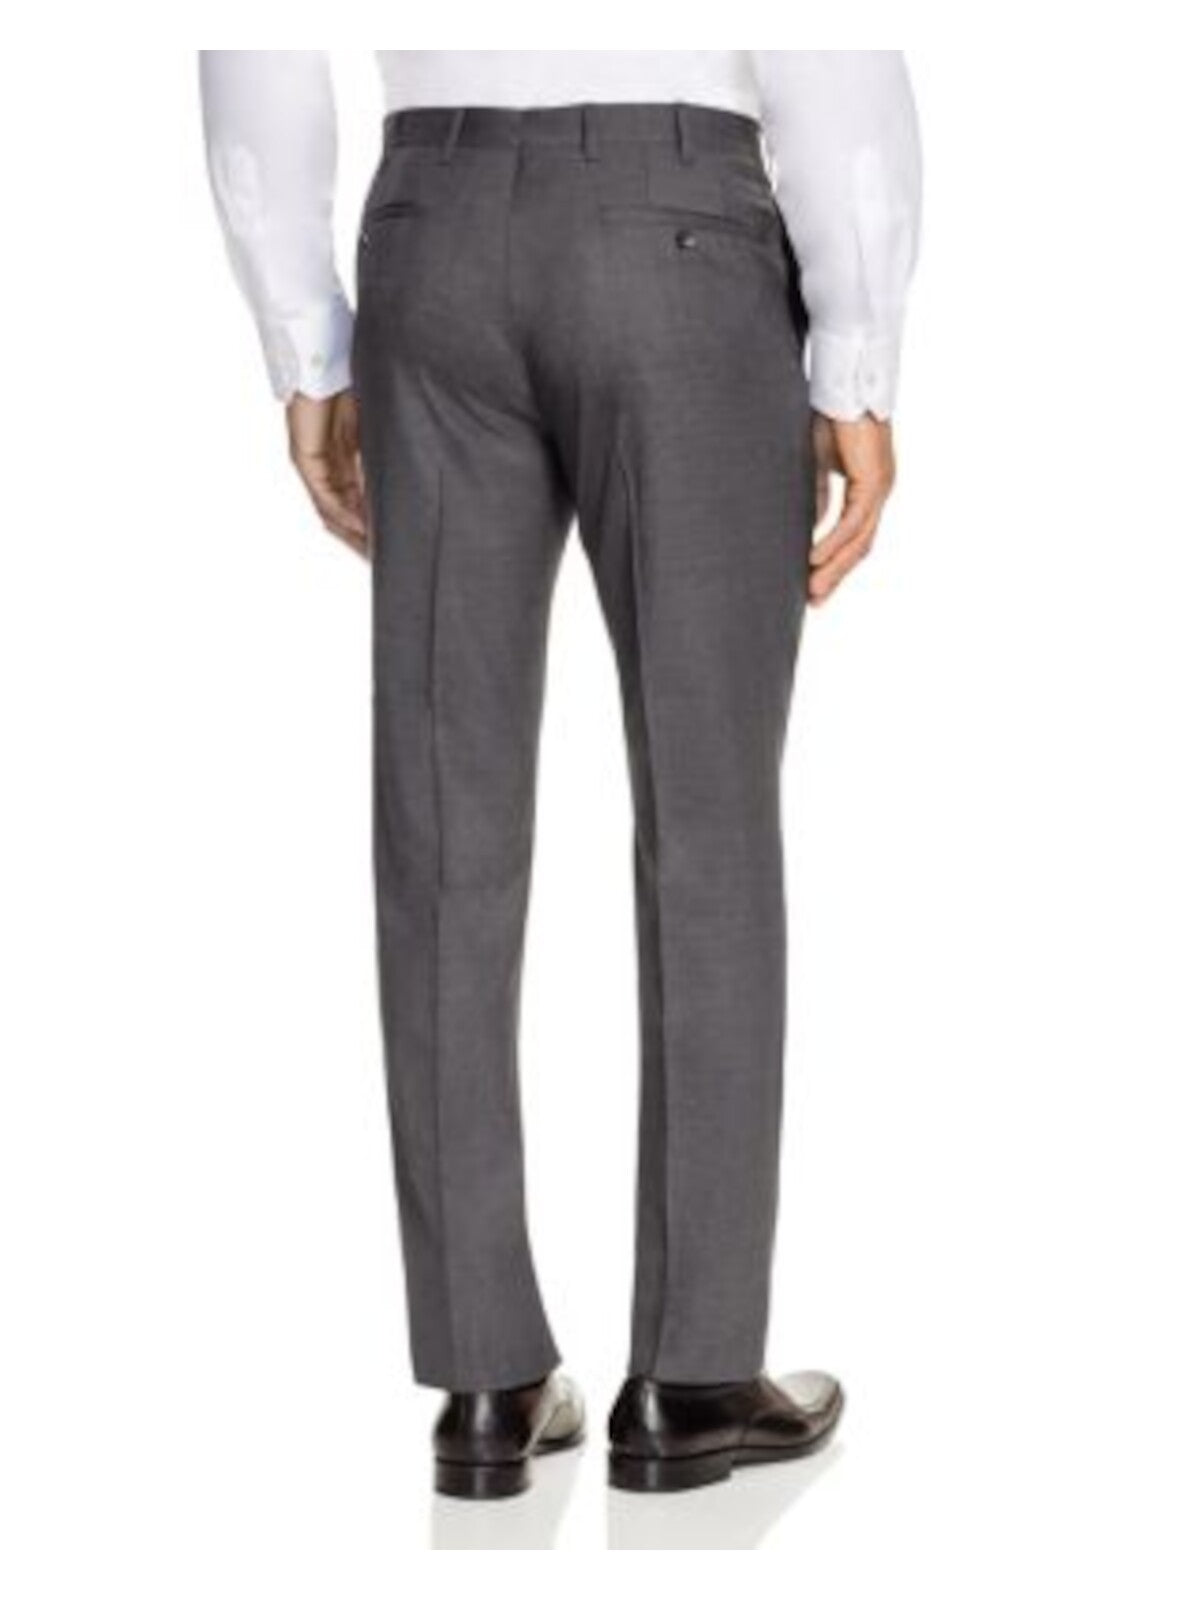 ALDO VALENTINI Mens Trentotto Gray Flat Front, Slim Fit Pants 38 Waist